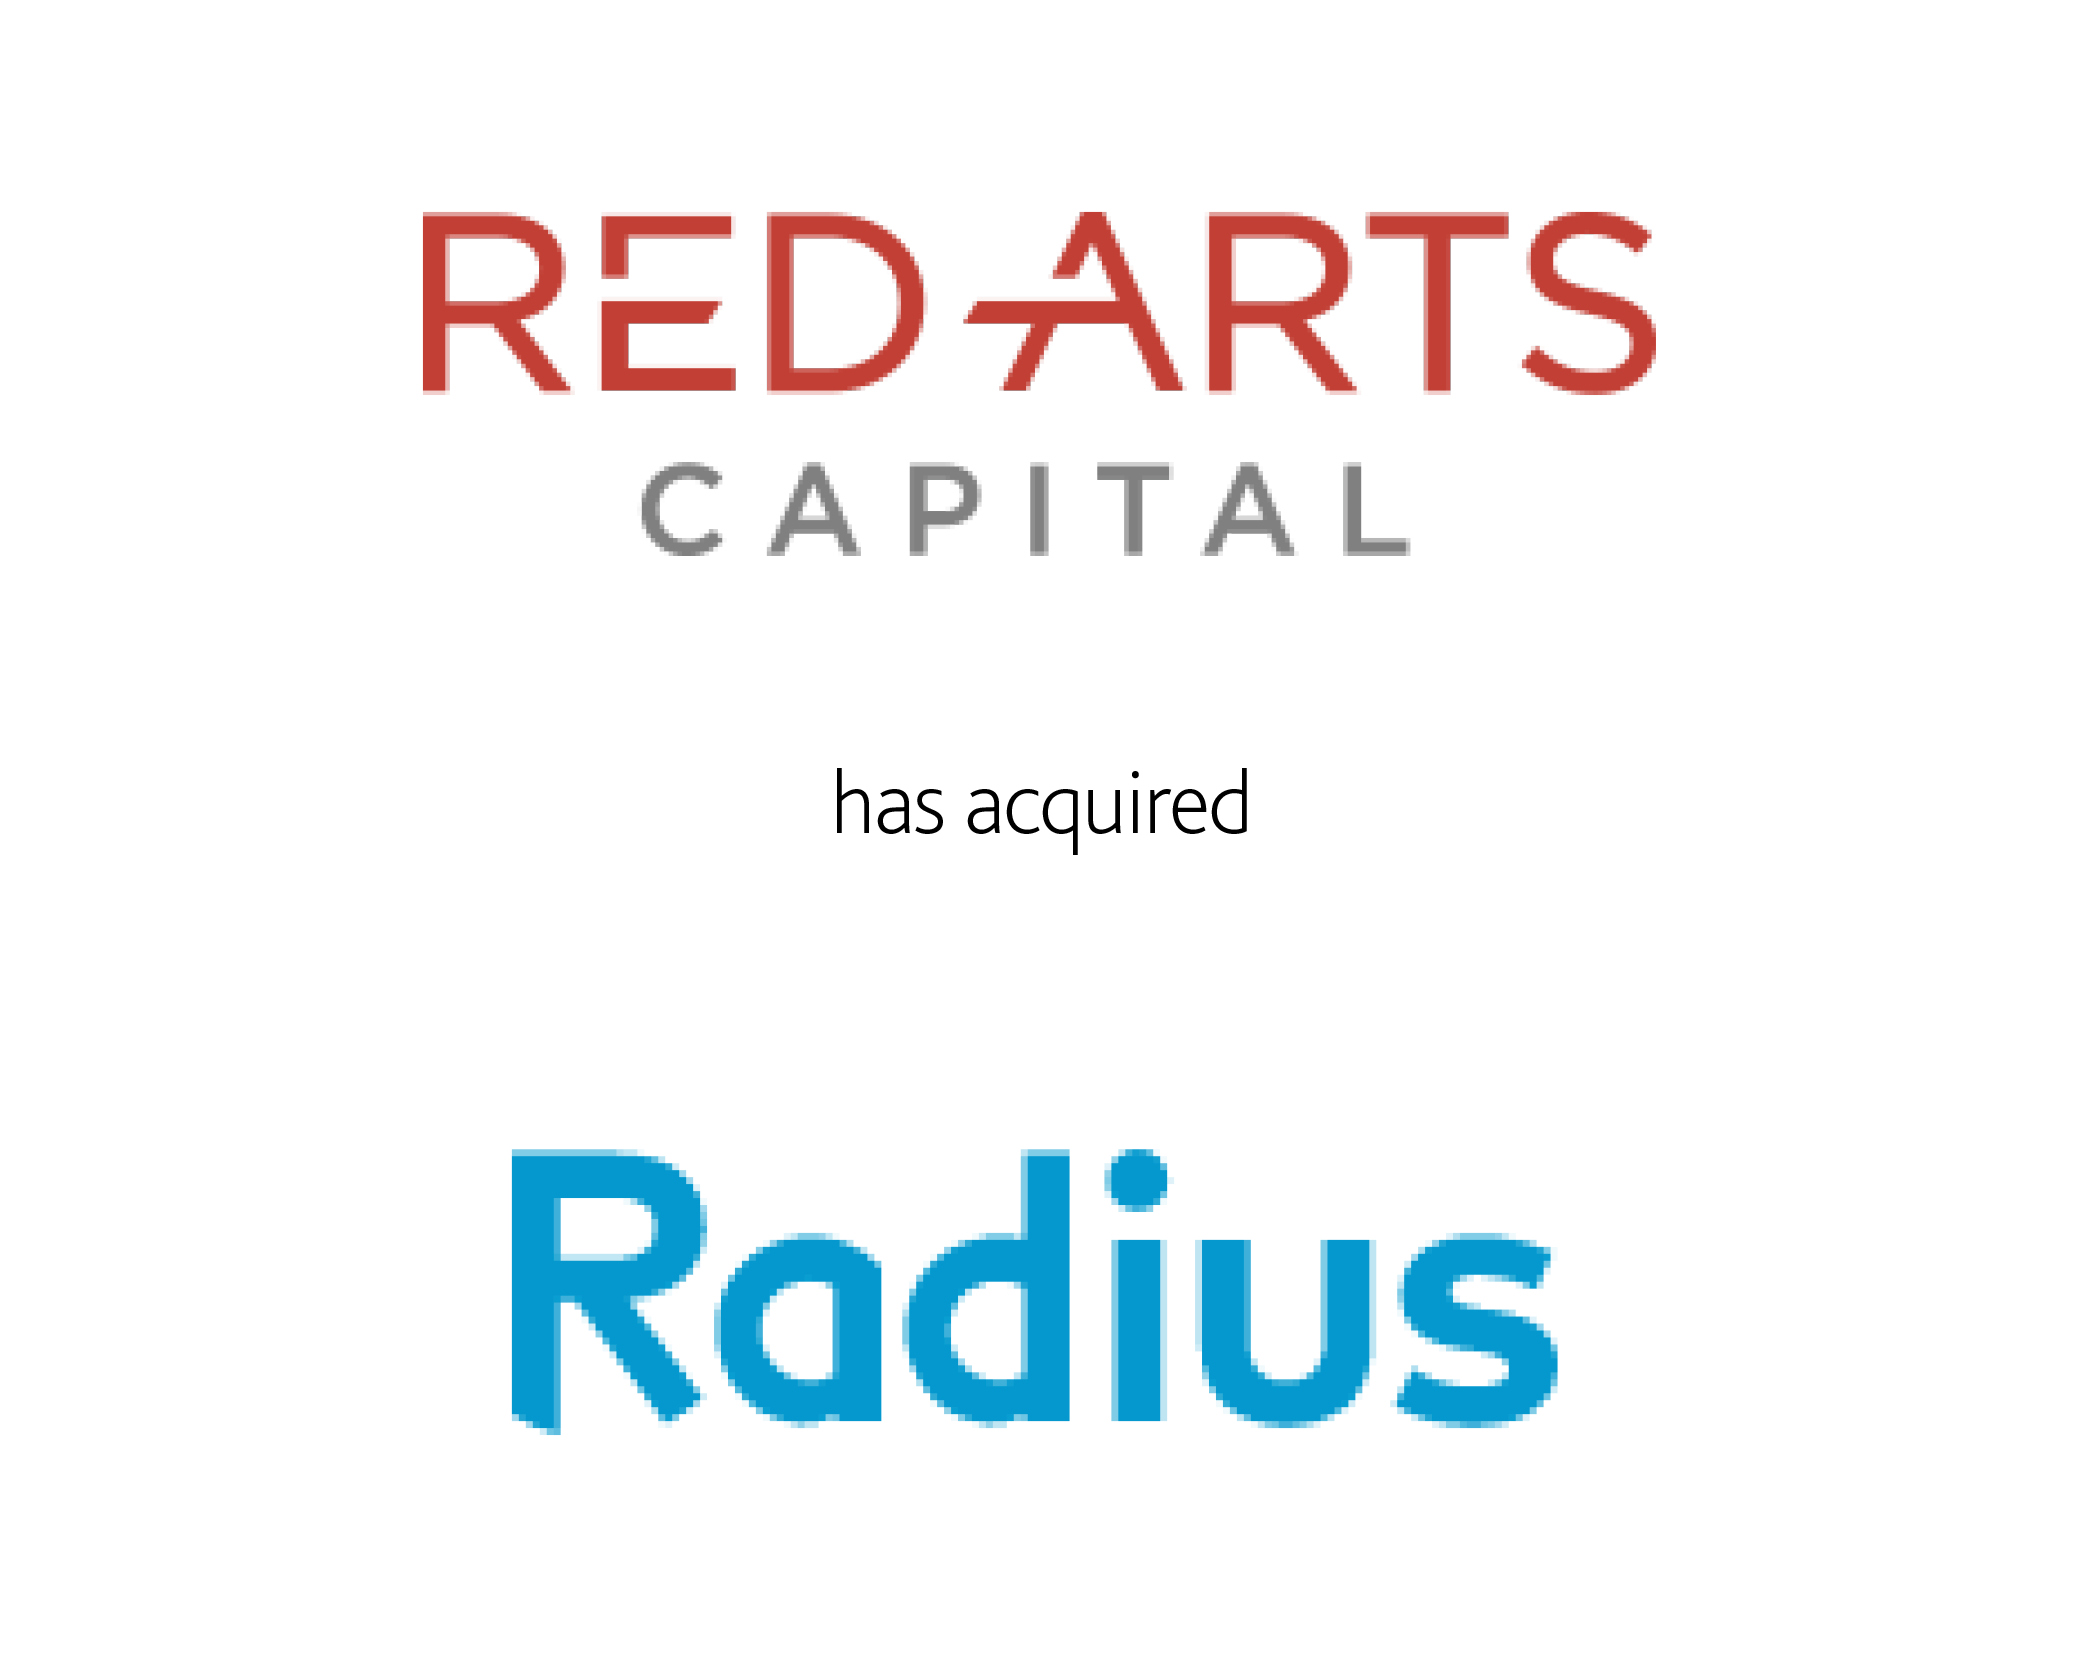 Red Arts Capital has acquired Radius